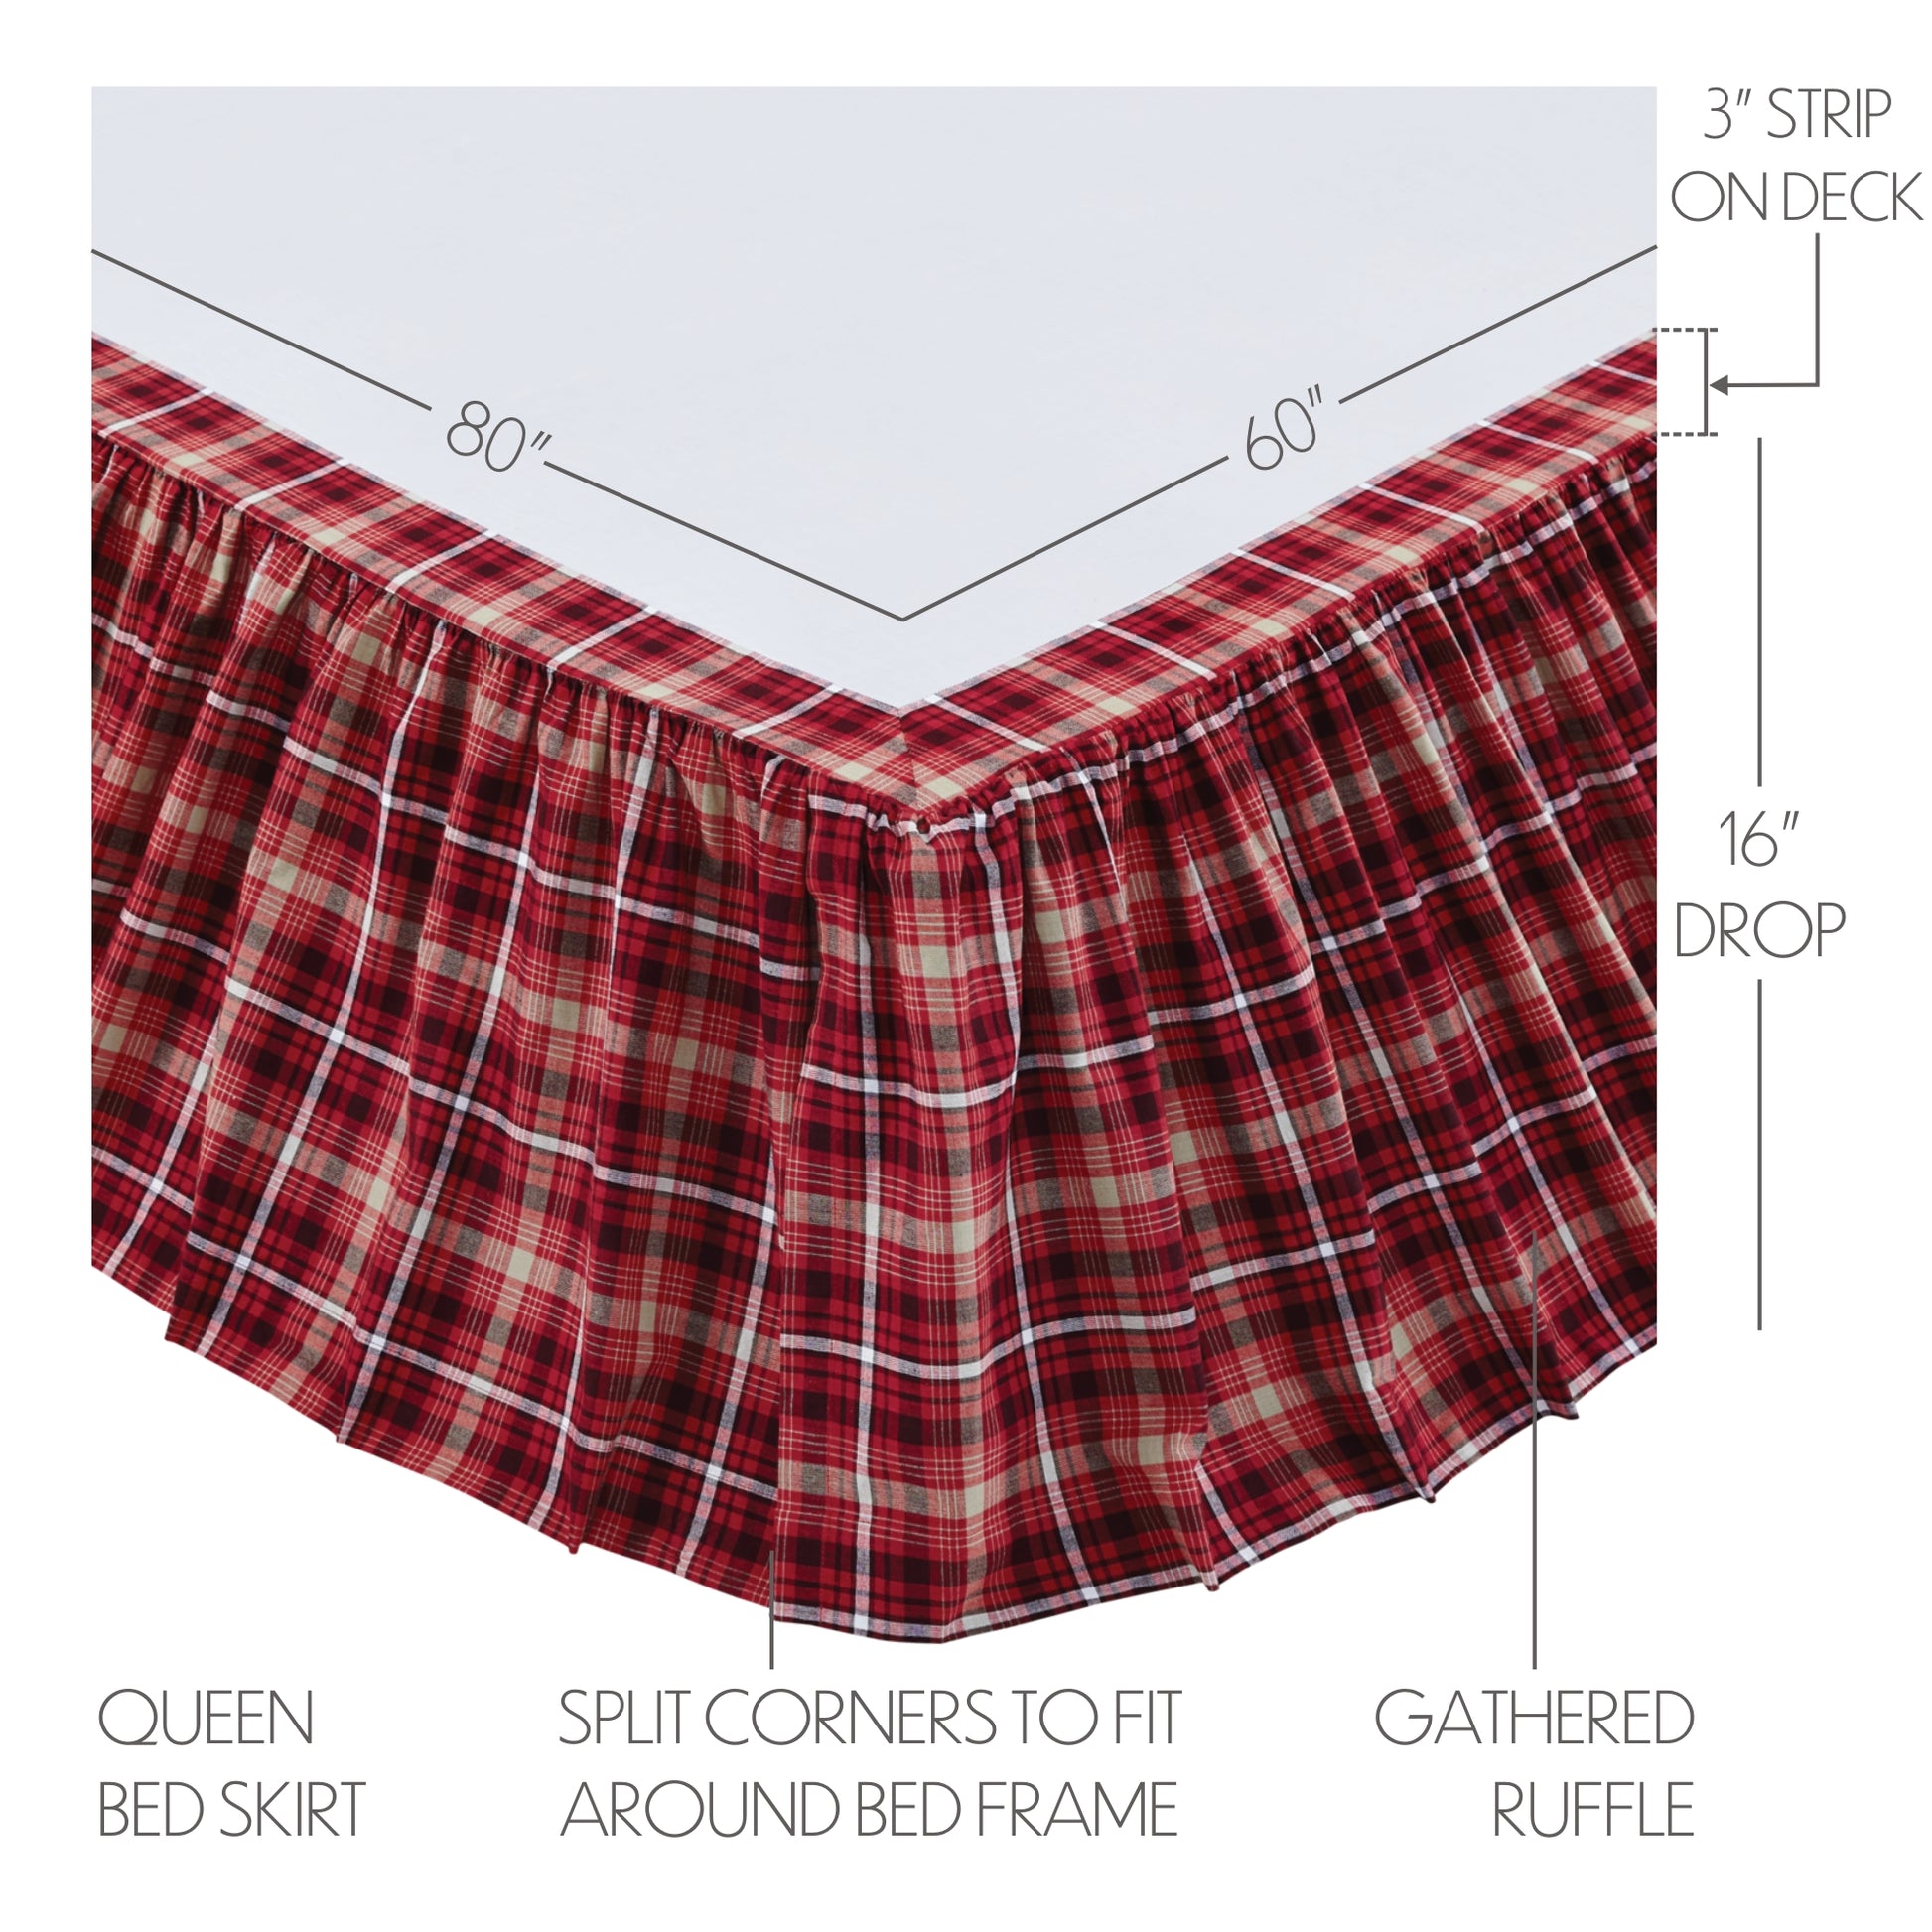 29193-Braxton-Queen-Bed-Skirt-60x80x16-image-2